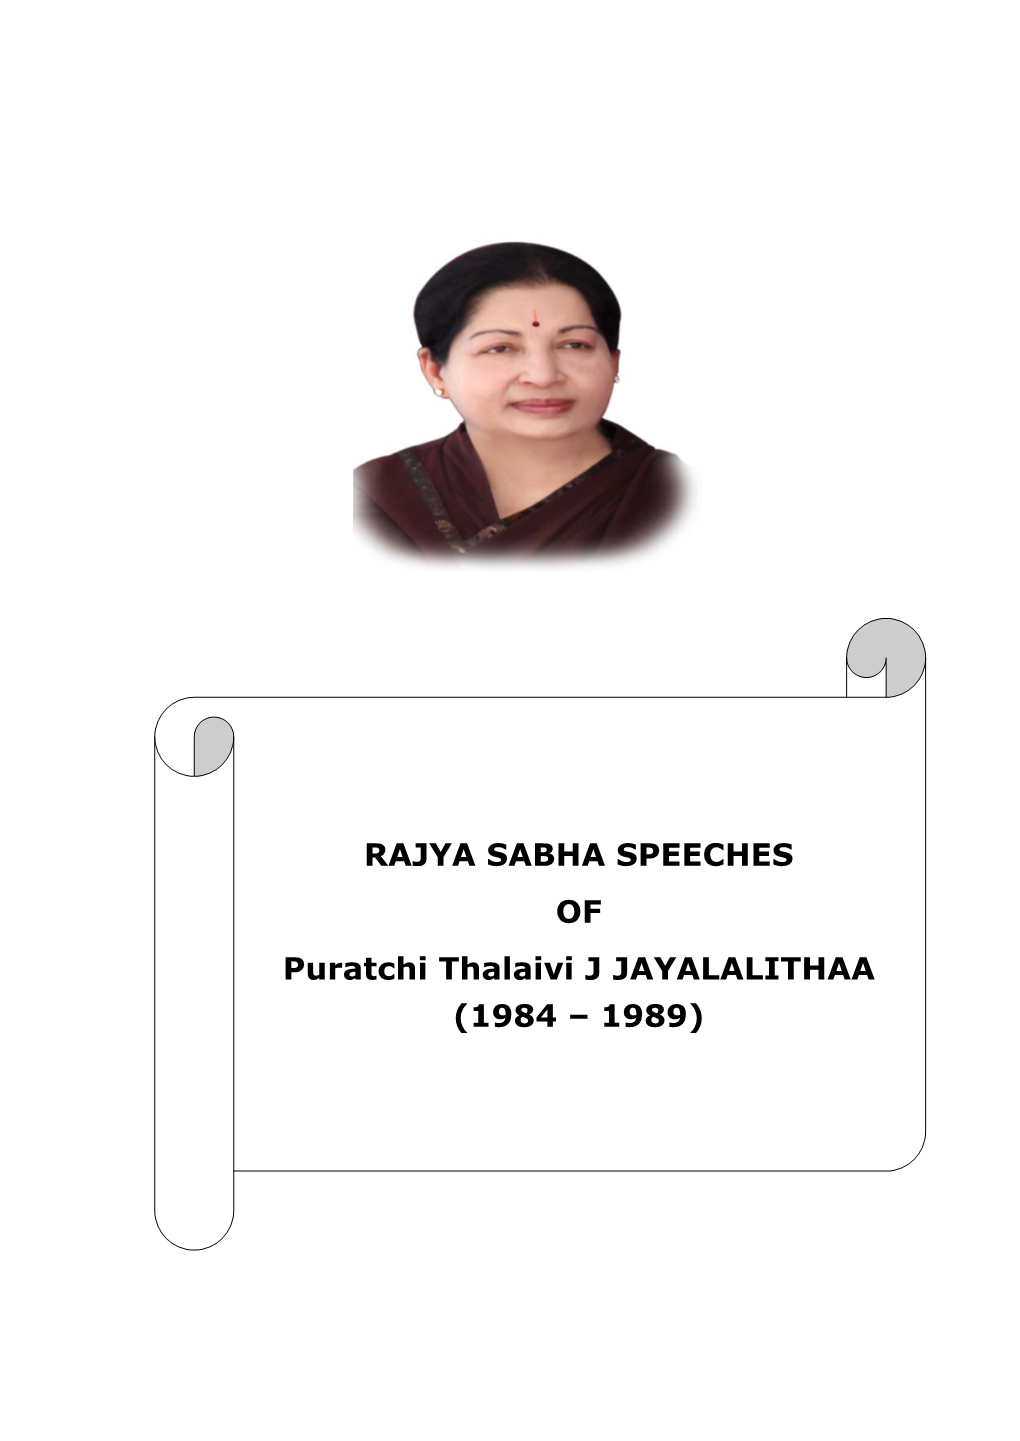 RAJYA SABHA SPEECHES of Puratchi Thalaivi J JAYALALITHAA